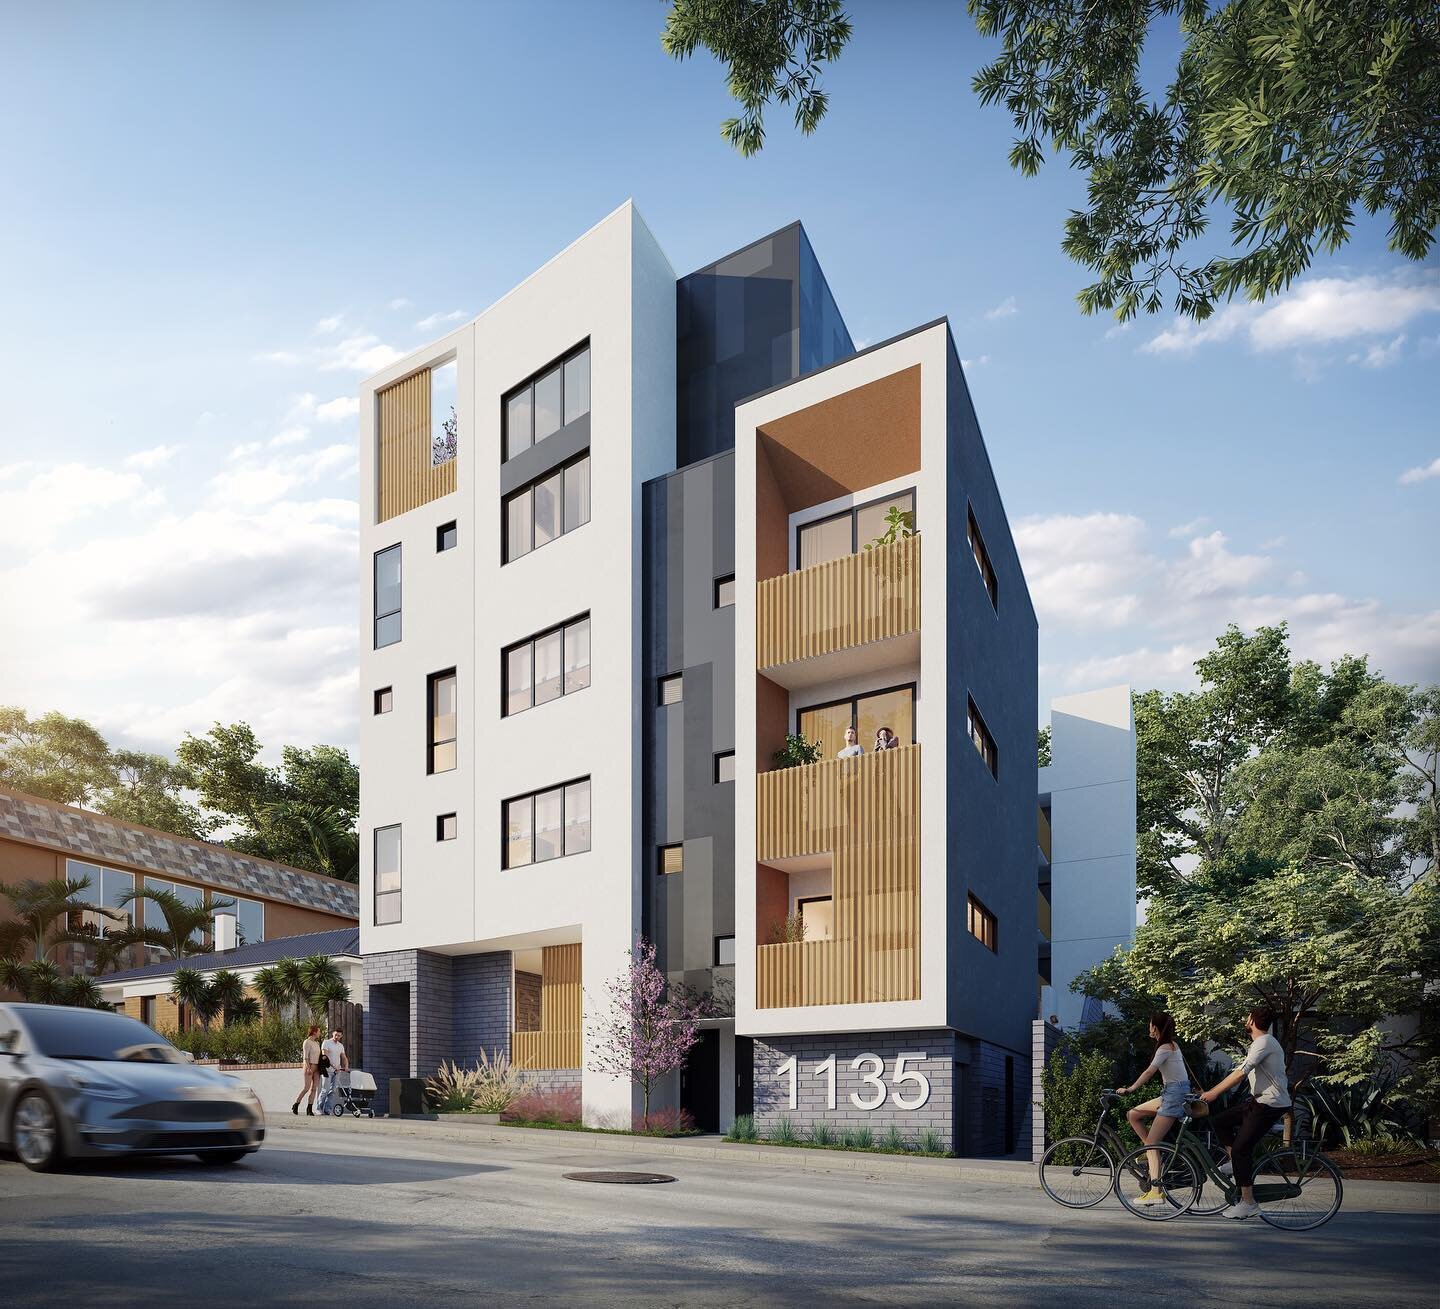 18 unit affordable housing development 

(3) 3-Bedroom
(2) 3-Bedroom + Den
(5) 2-Bedroom
(1) 2-Bedroom + Mezzanine&nbsp;
(4) 1-Bedroom + Mezzanine
(1) 1-Bedroom
(2) Studio&nbsp;

#architecture #housing #sandiegoarchitecture #affordablehousing